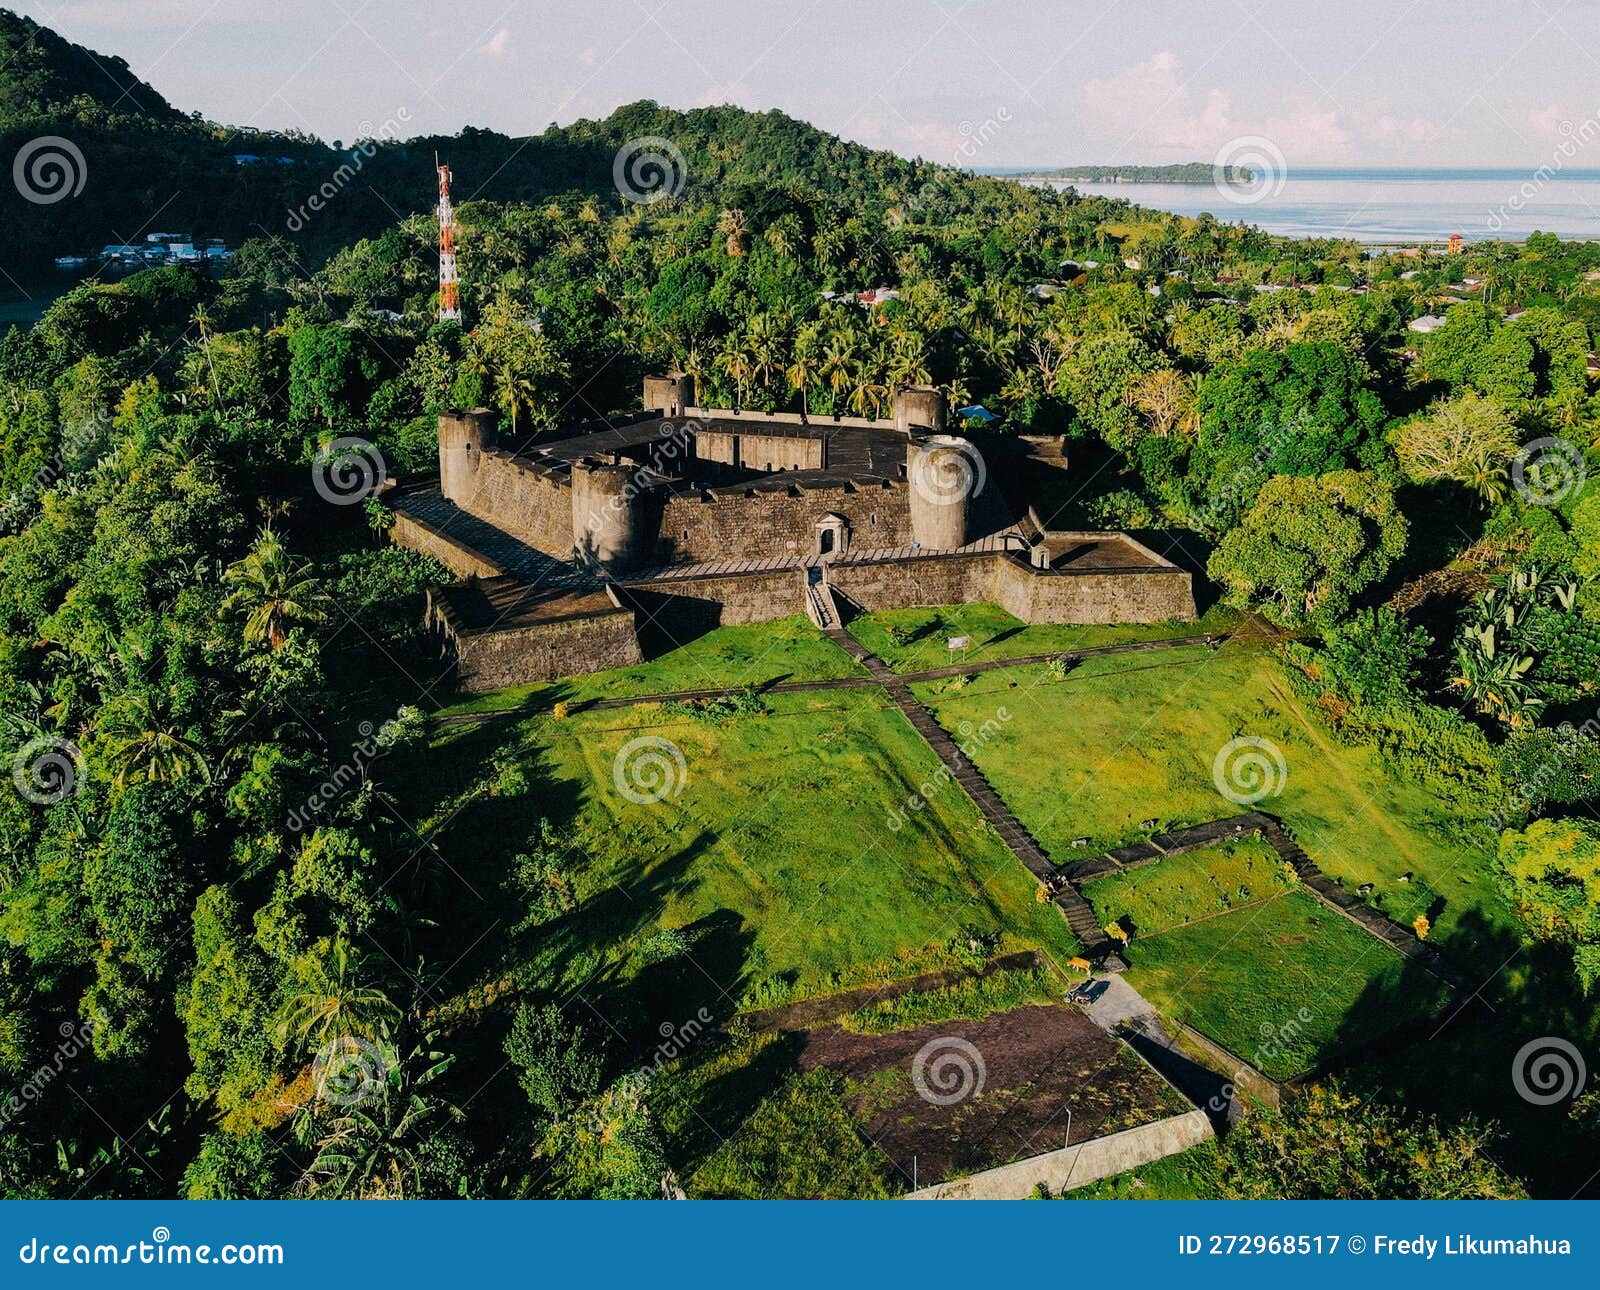 belgica fort in banda naira island